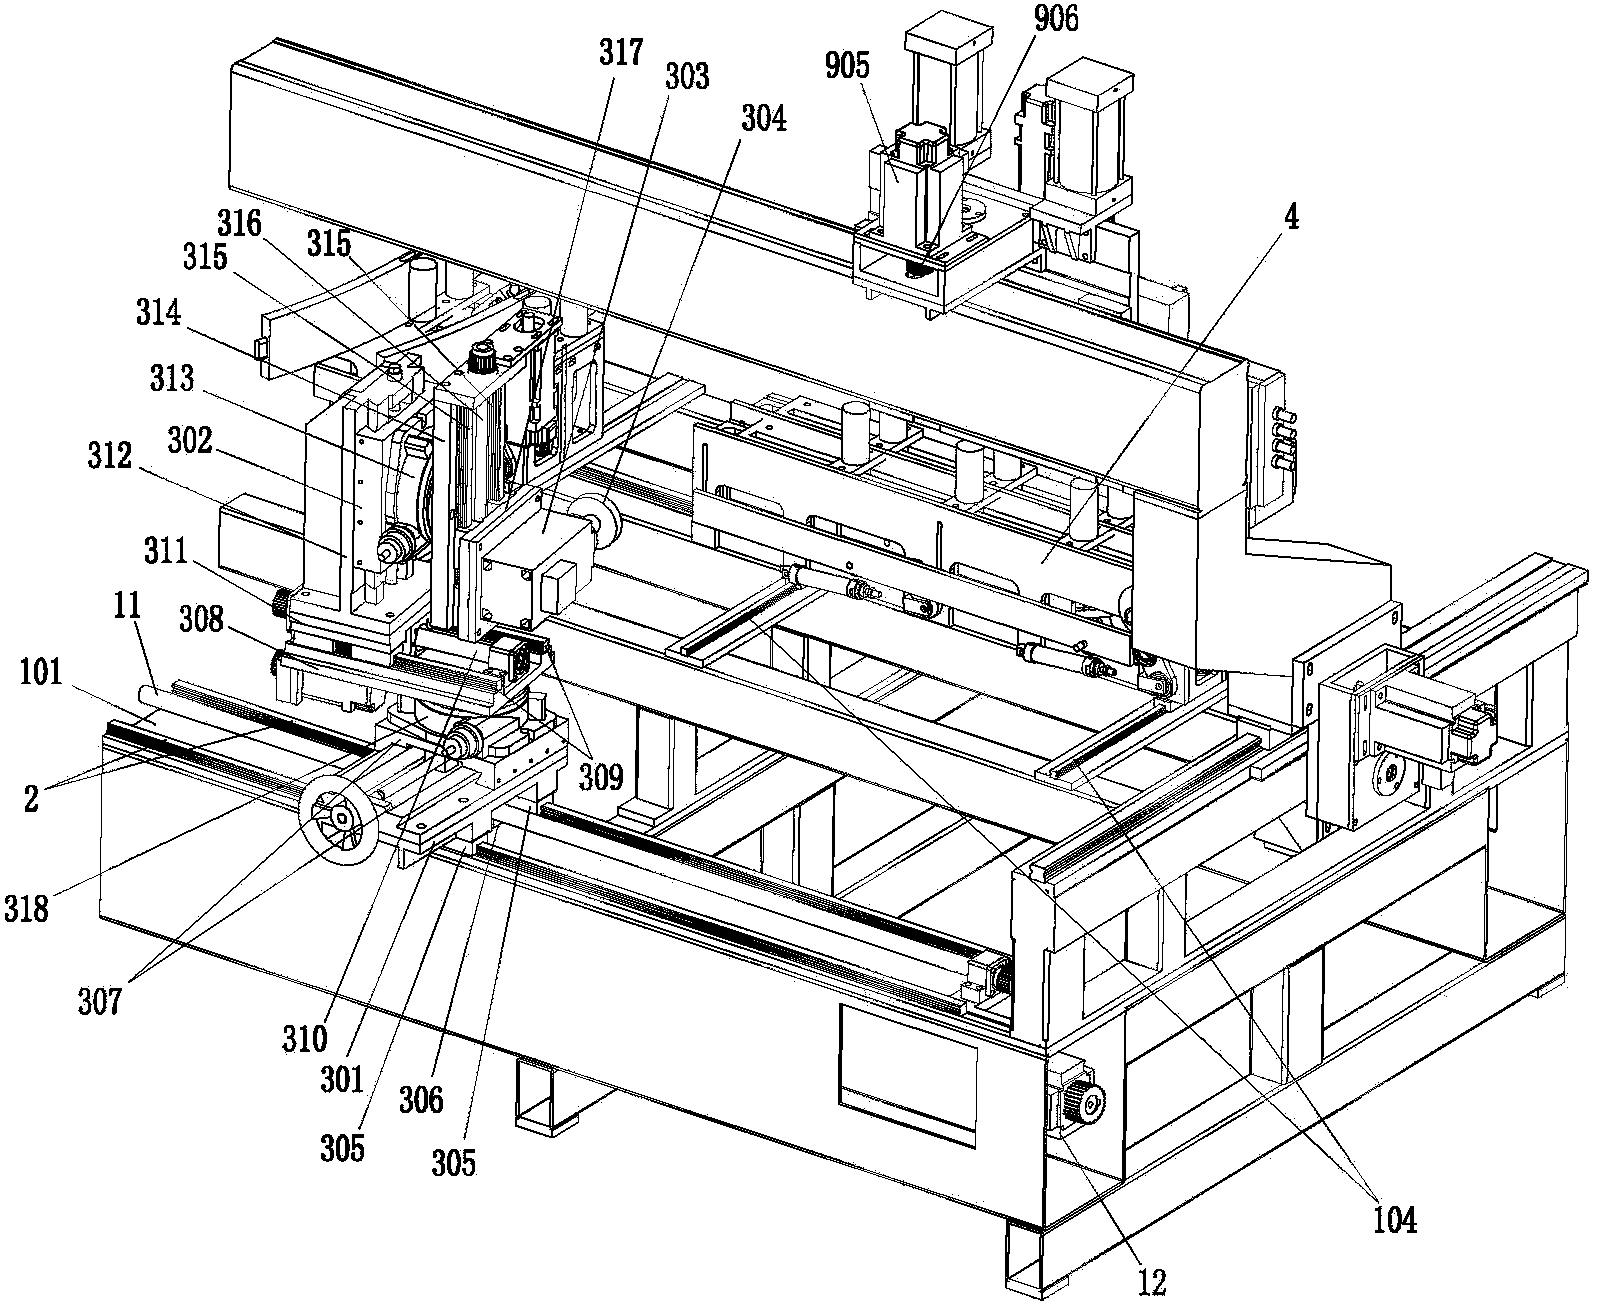 Numerical-control gantry tenon milling machine